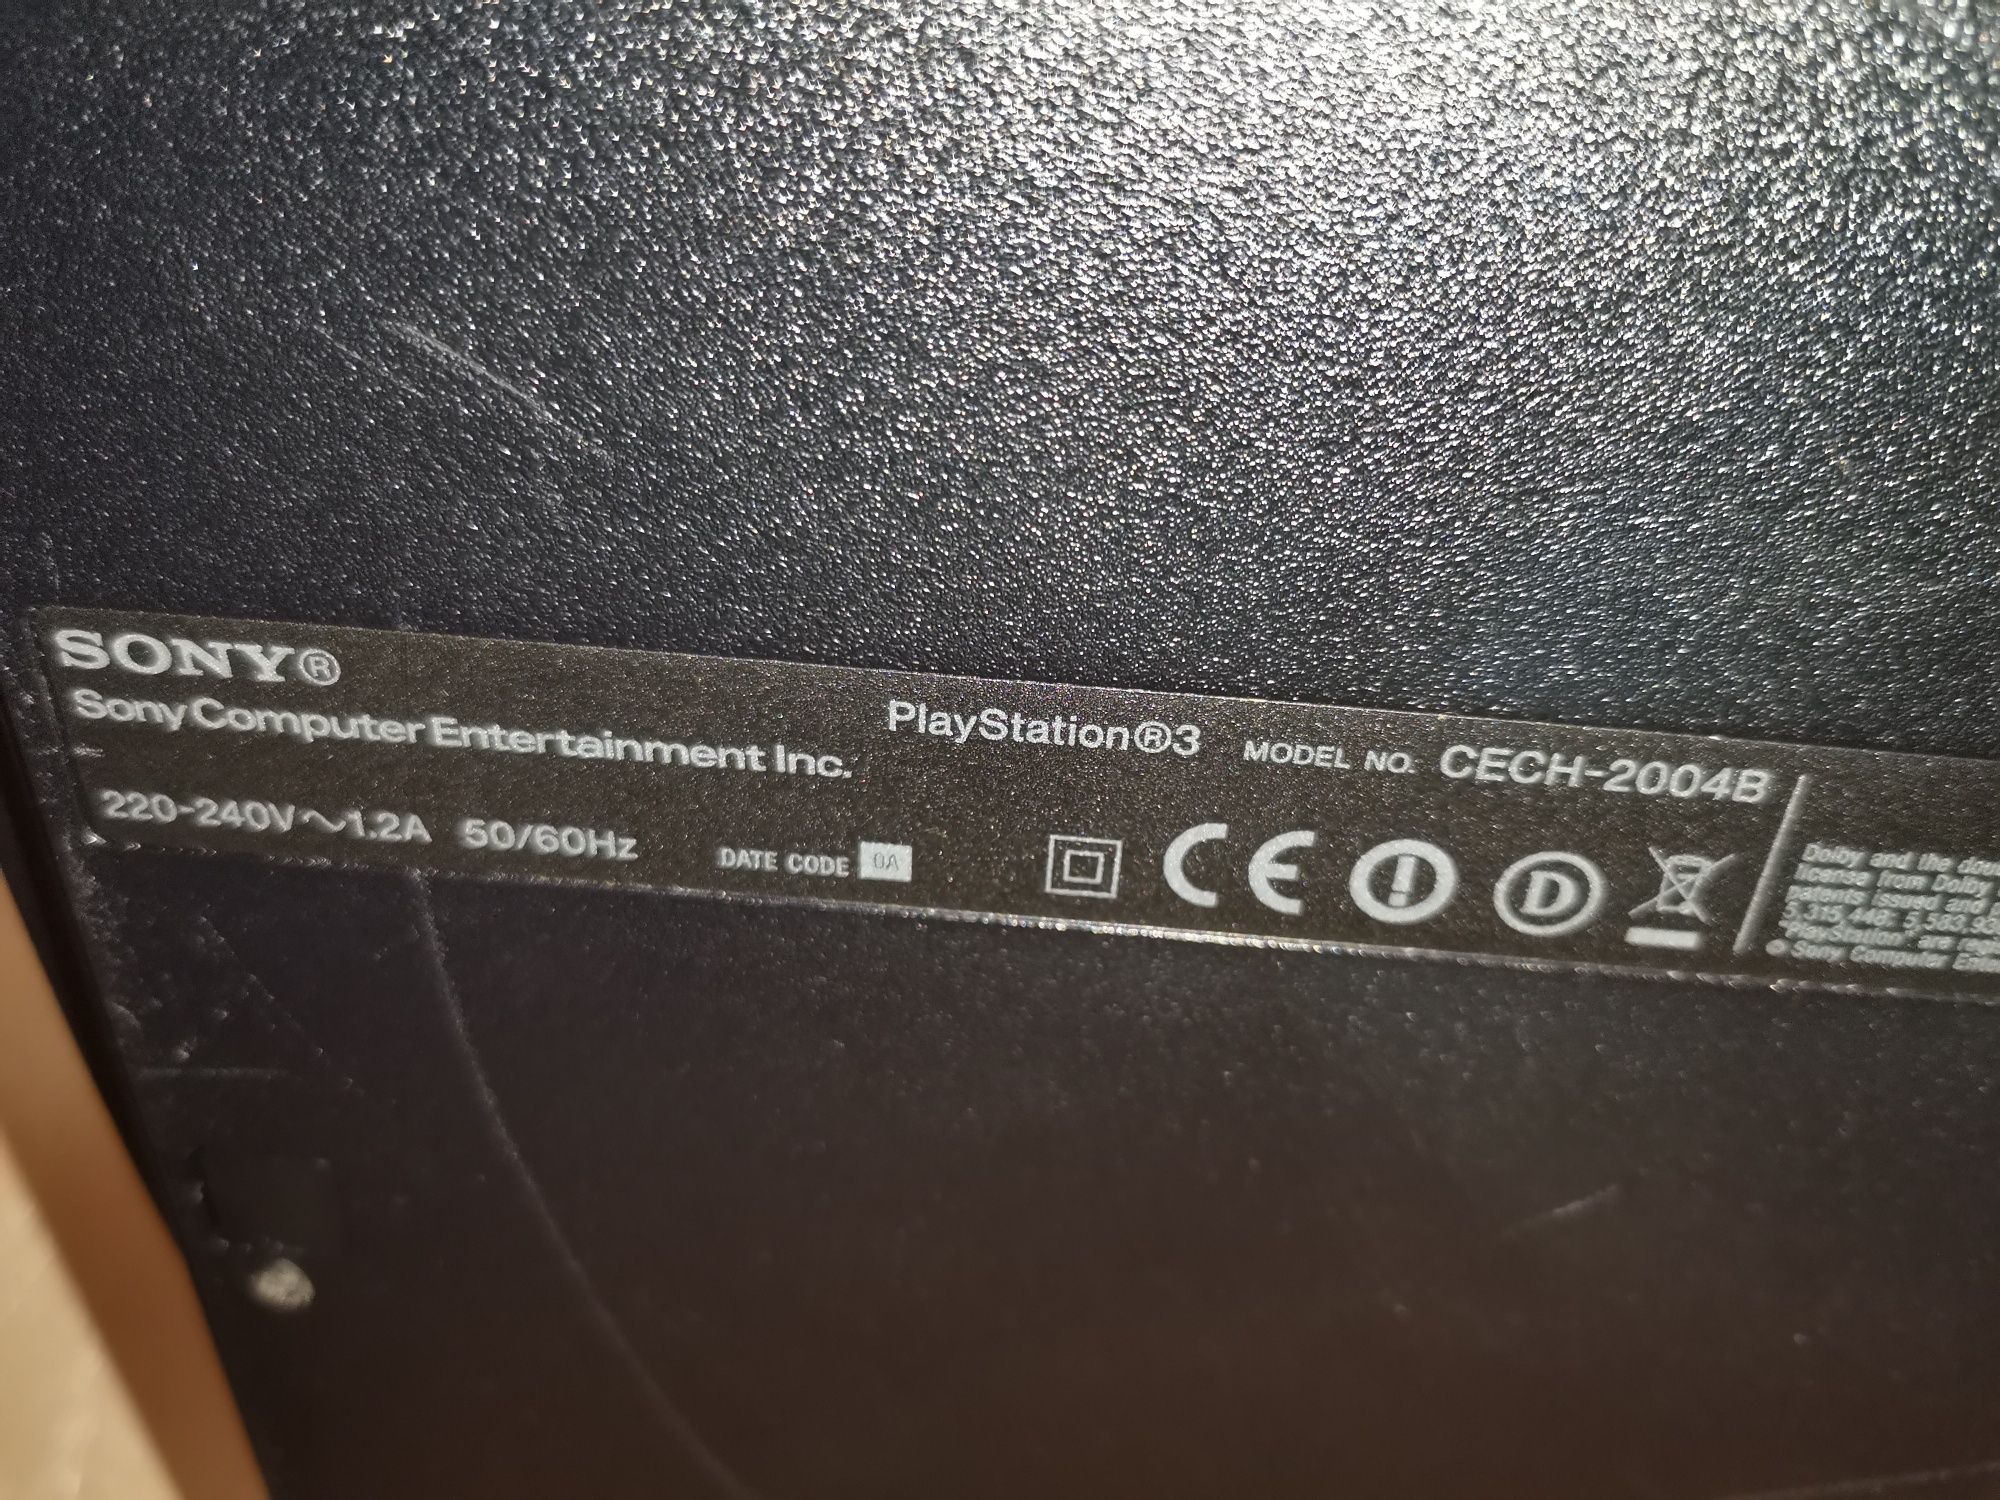 Sony Playstation 3 slim